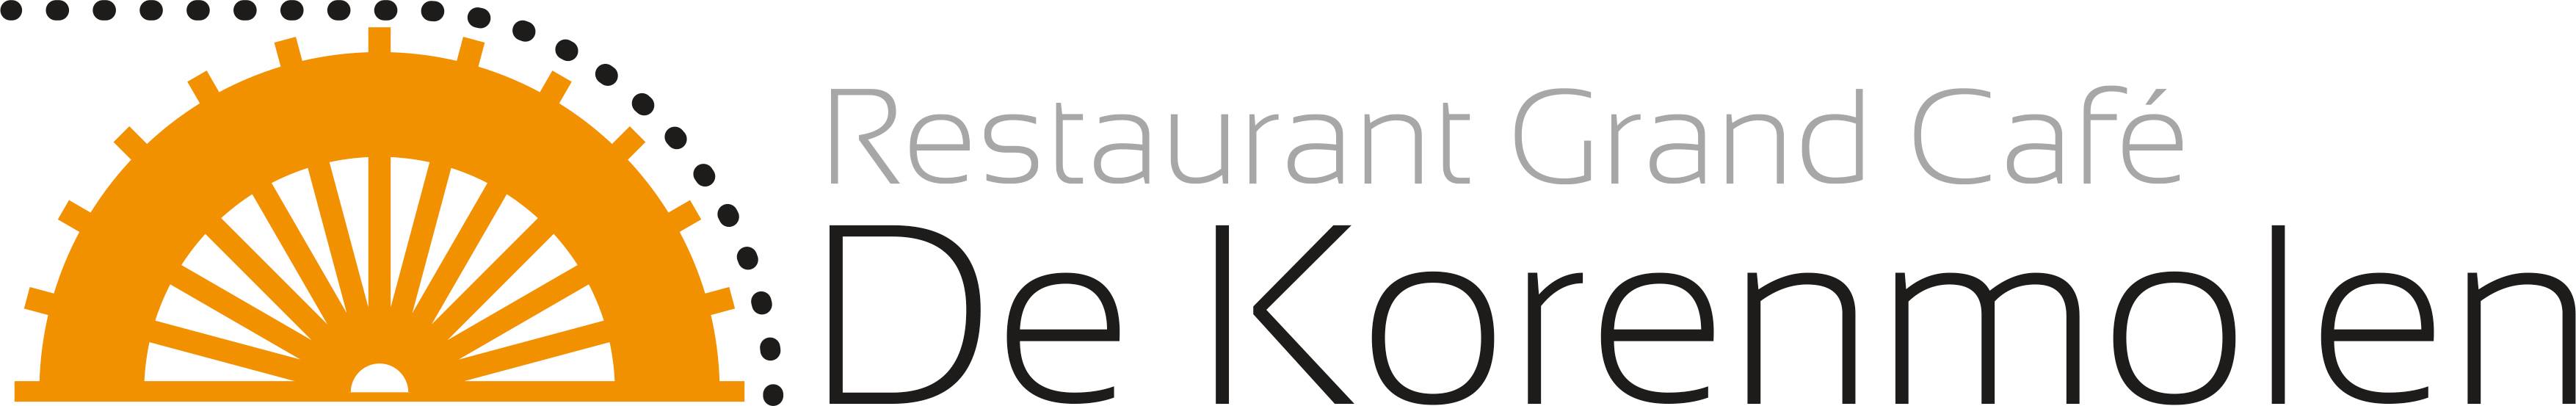 Restaurant Grand Café de Korenmolen